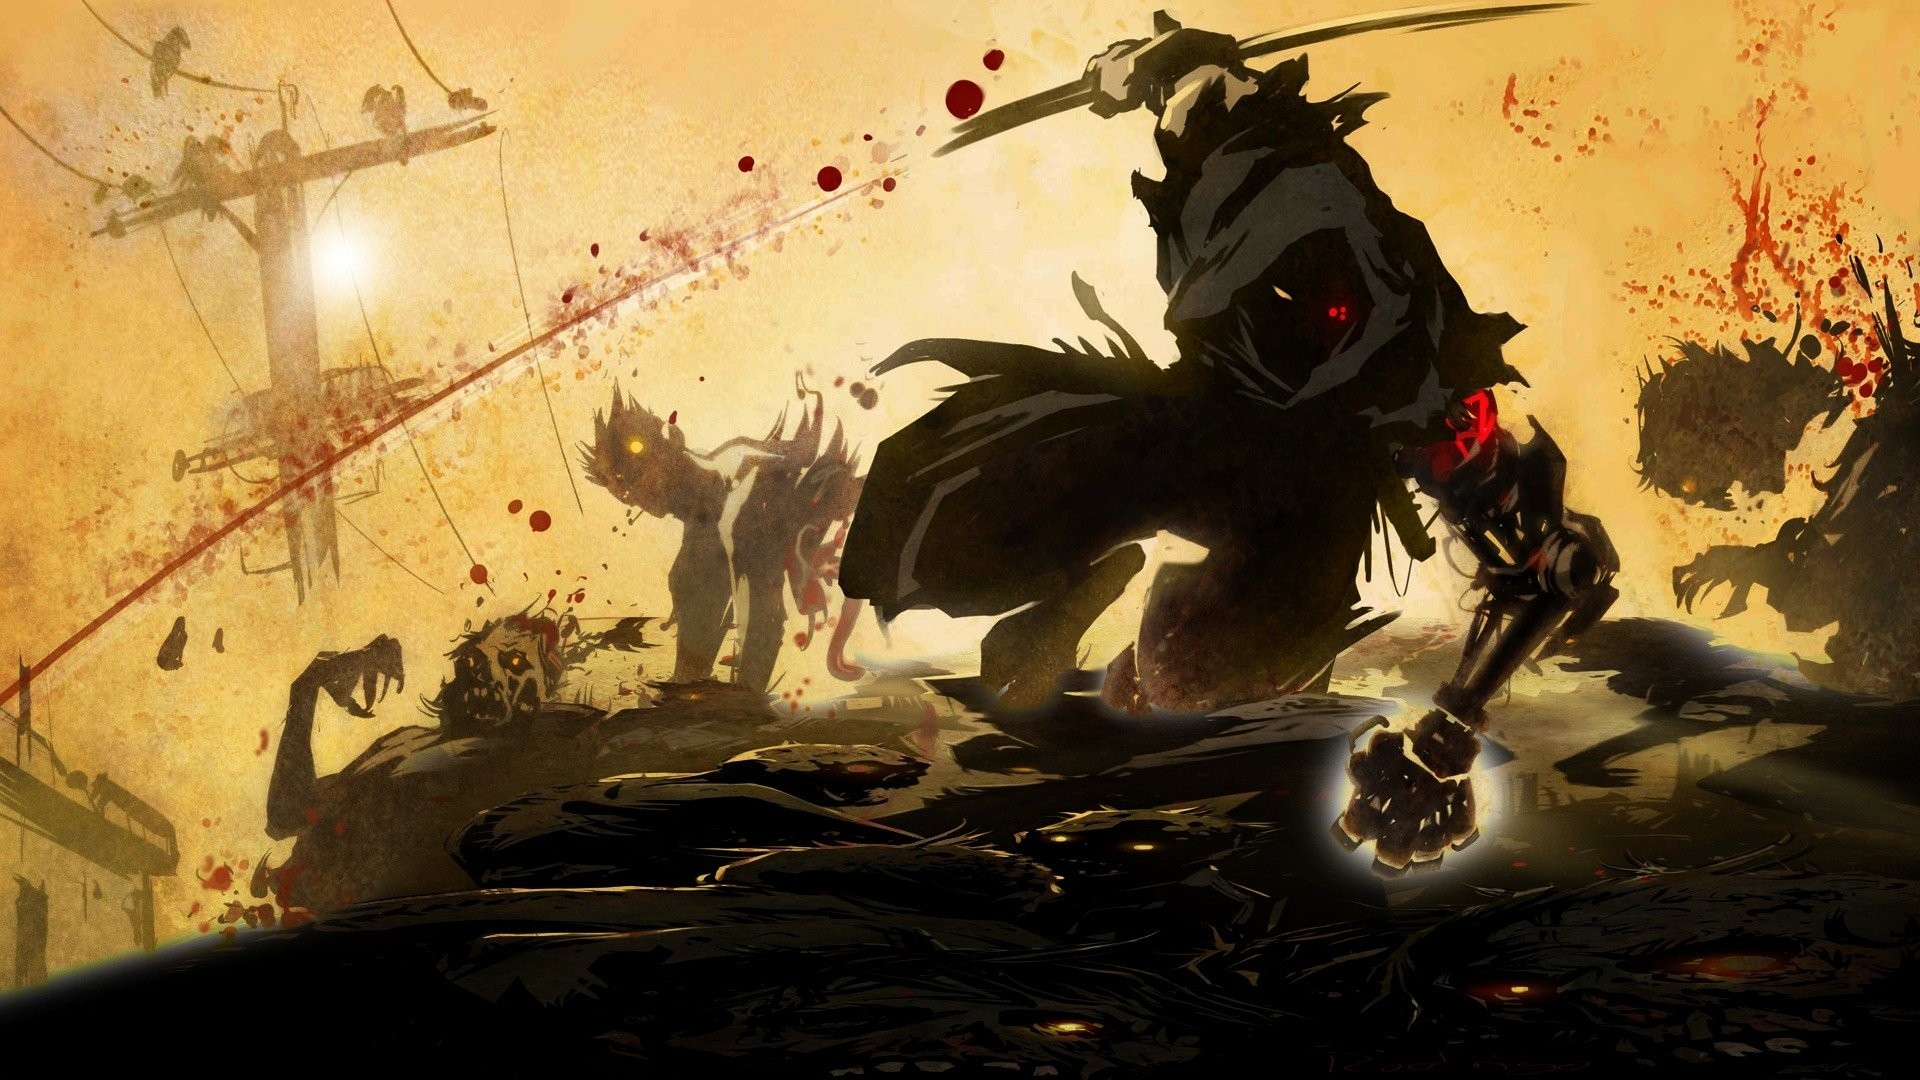 ninja assassin wallpaper,action adventure game,cg artwork,illustration,graphic design,games